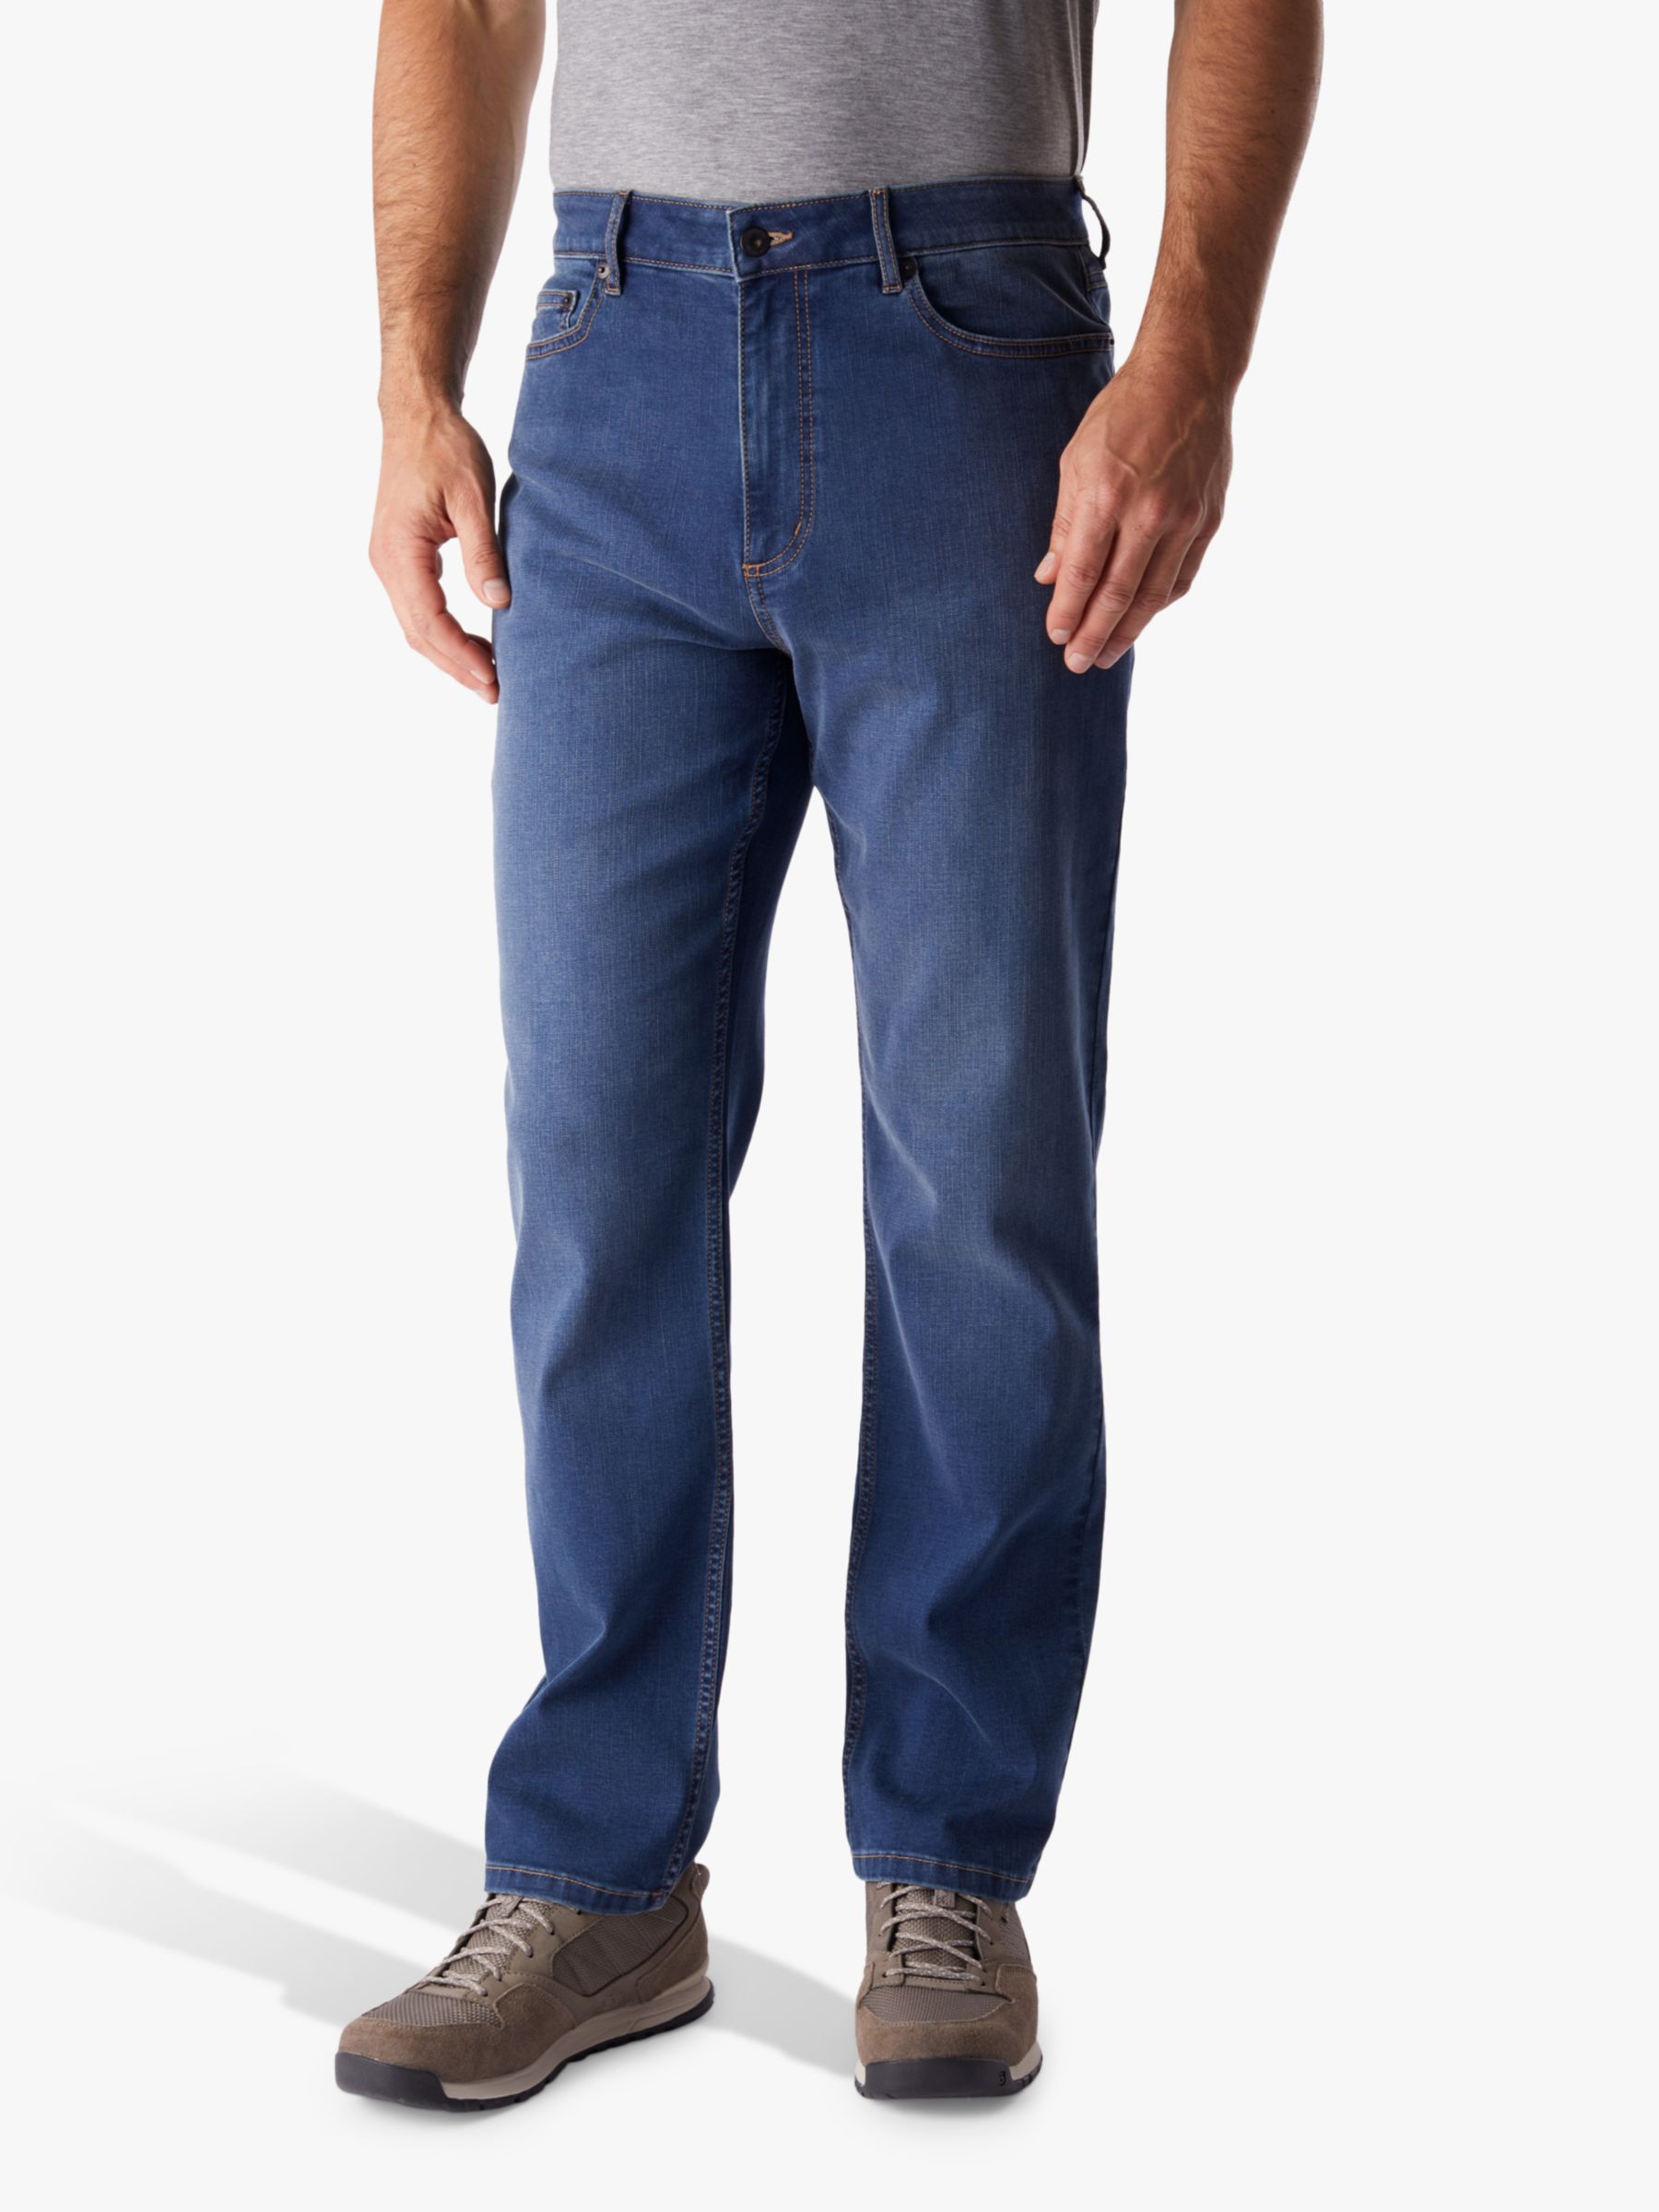 Rohan Flex Men's Classic Fit Jeans, Mid Denim, 36R